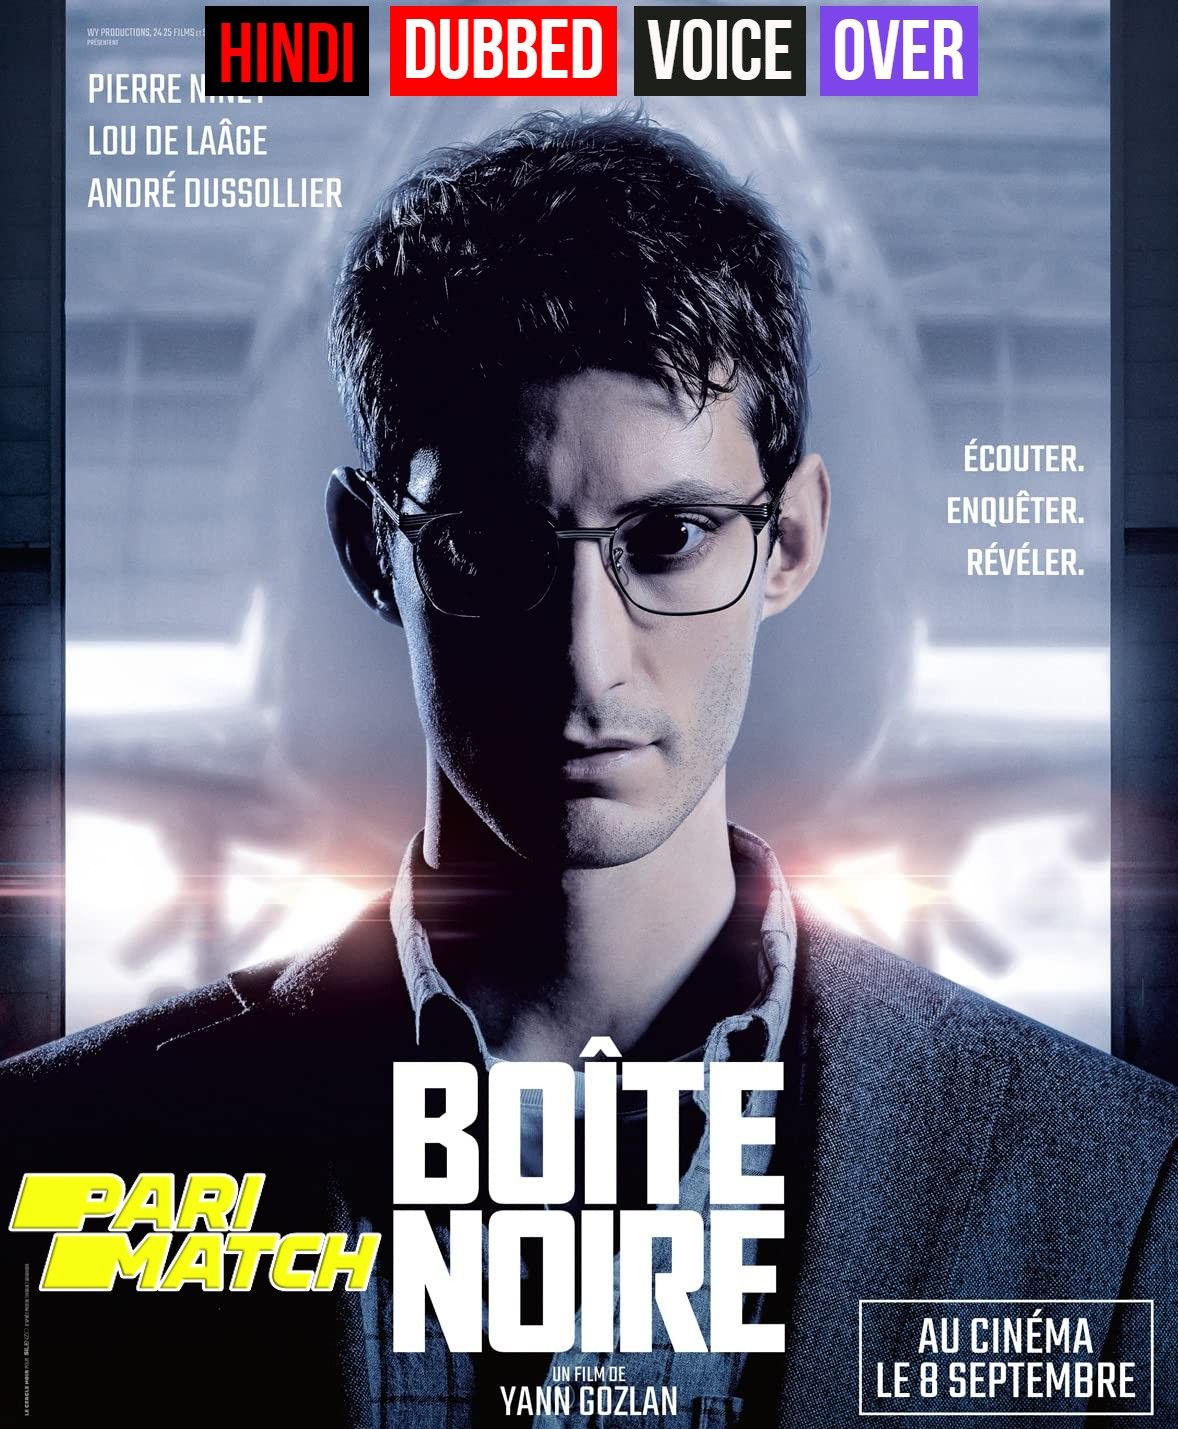 Boite noire (2021) Hindi (Voice Over) Dubbed WEBRip download full movie